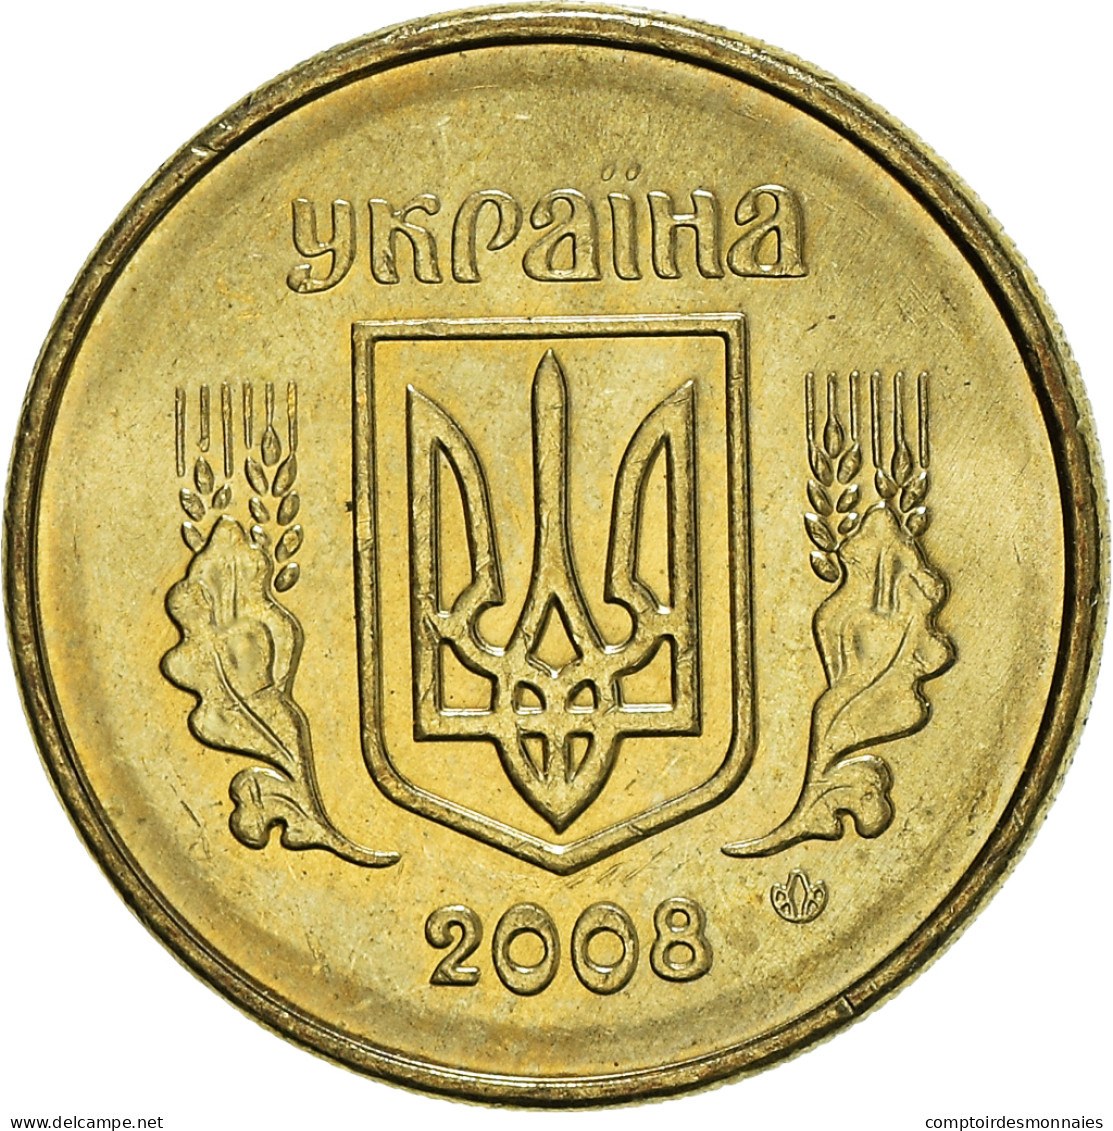 Monnaie, Ukraine, 10 Kopiyok, 2008 - Ukraine